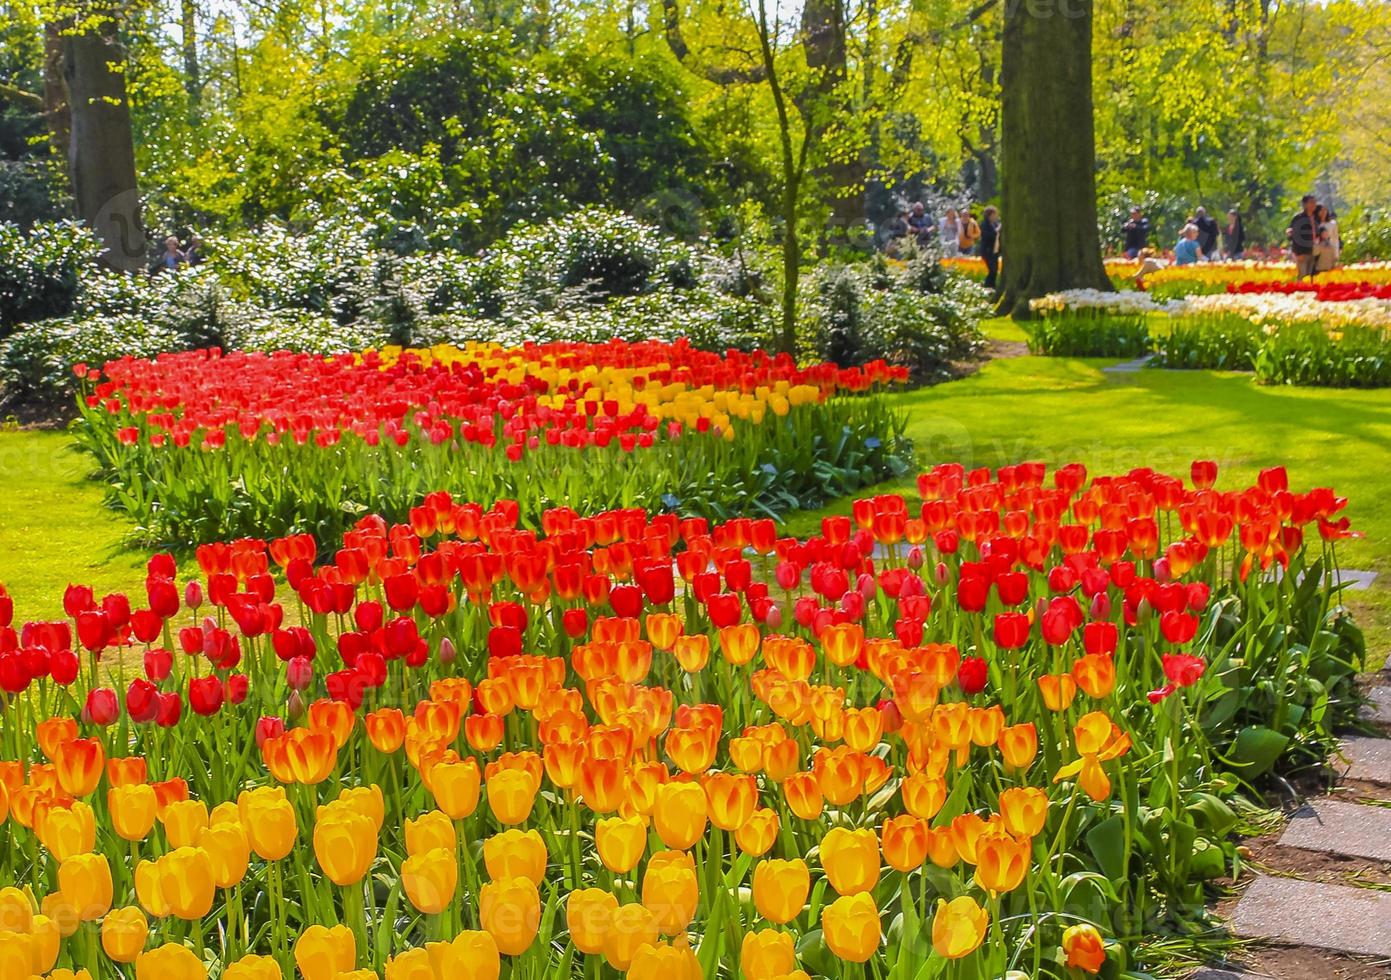 muchos coloridos tulipanes narcisos keukenhof lisse holanda países bajos. foto